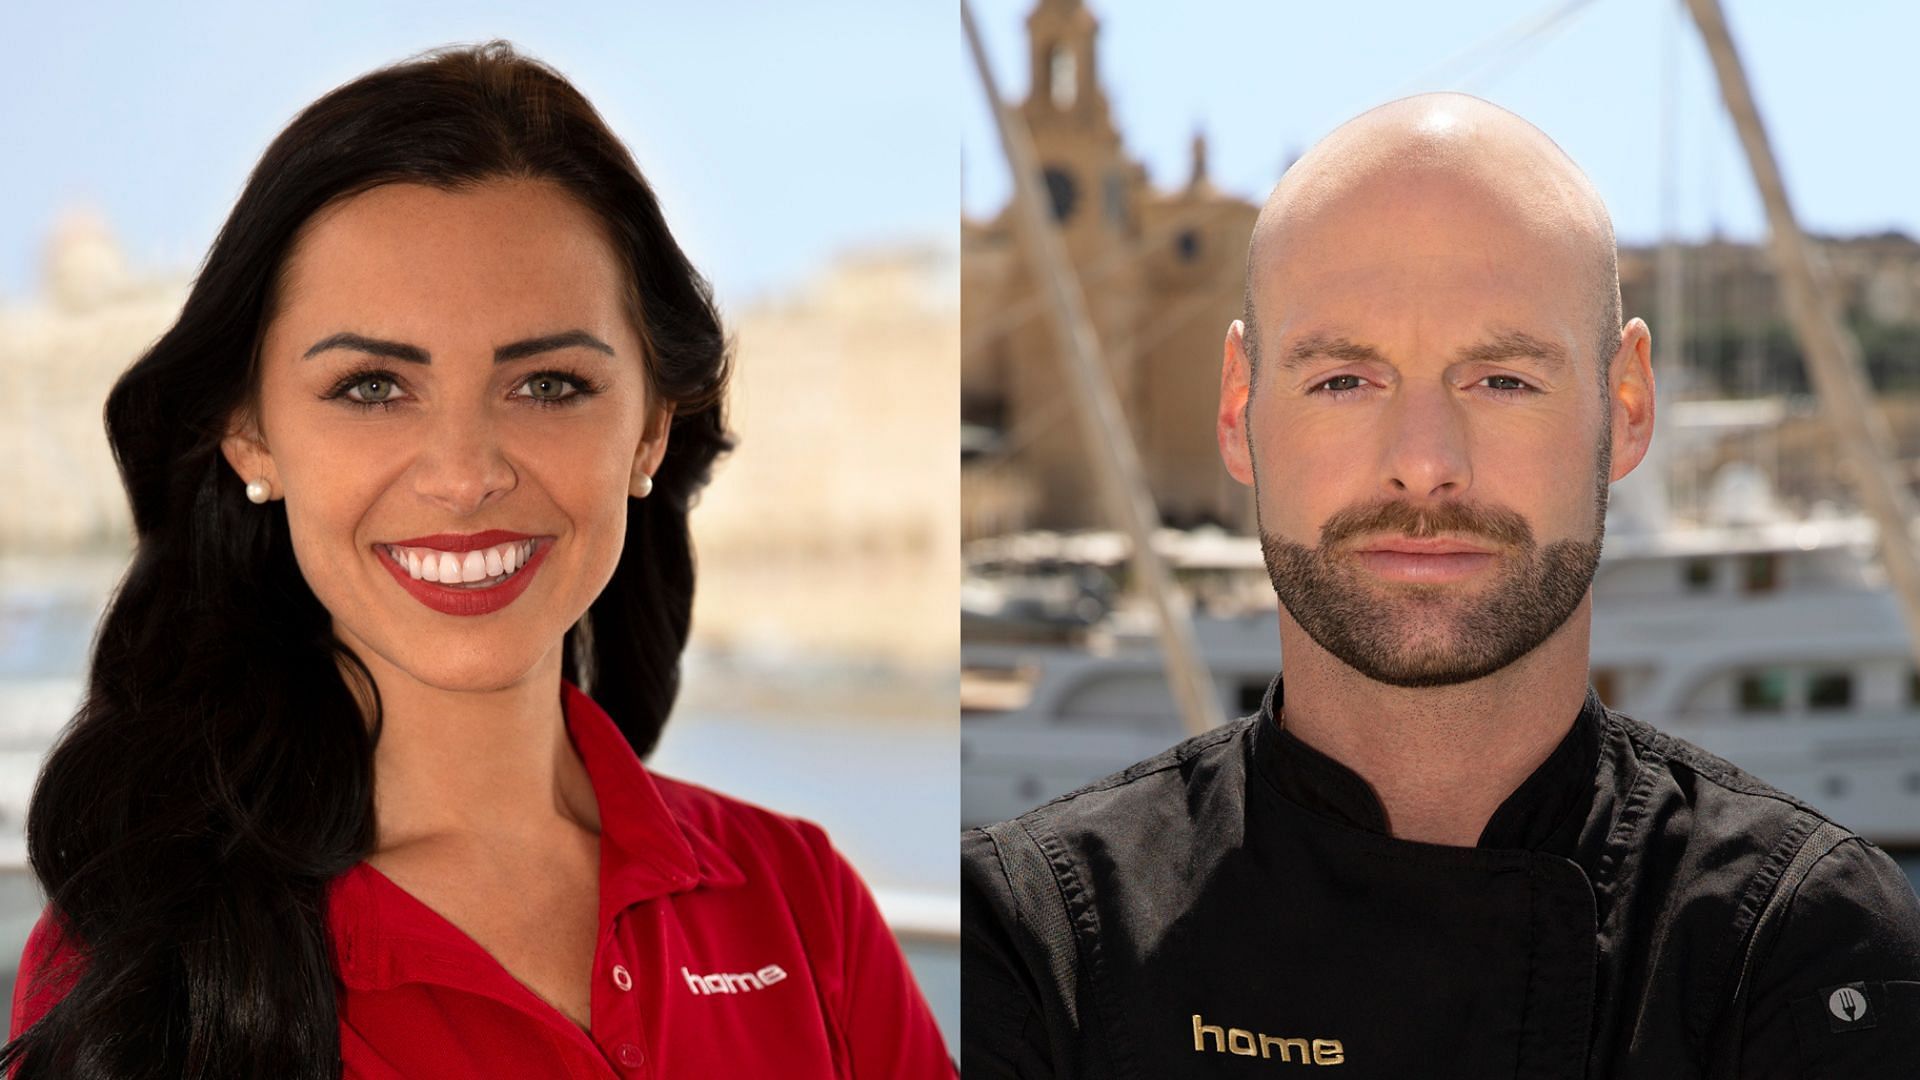 Chief steward Natasha Webb and chef Dave White from Below Deck Mediterranean Season 7 (Image via Bravo)